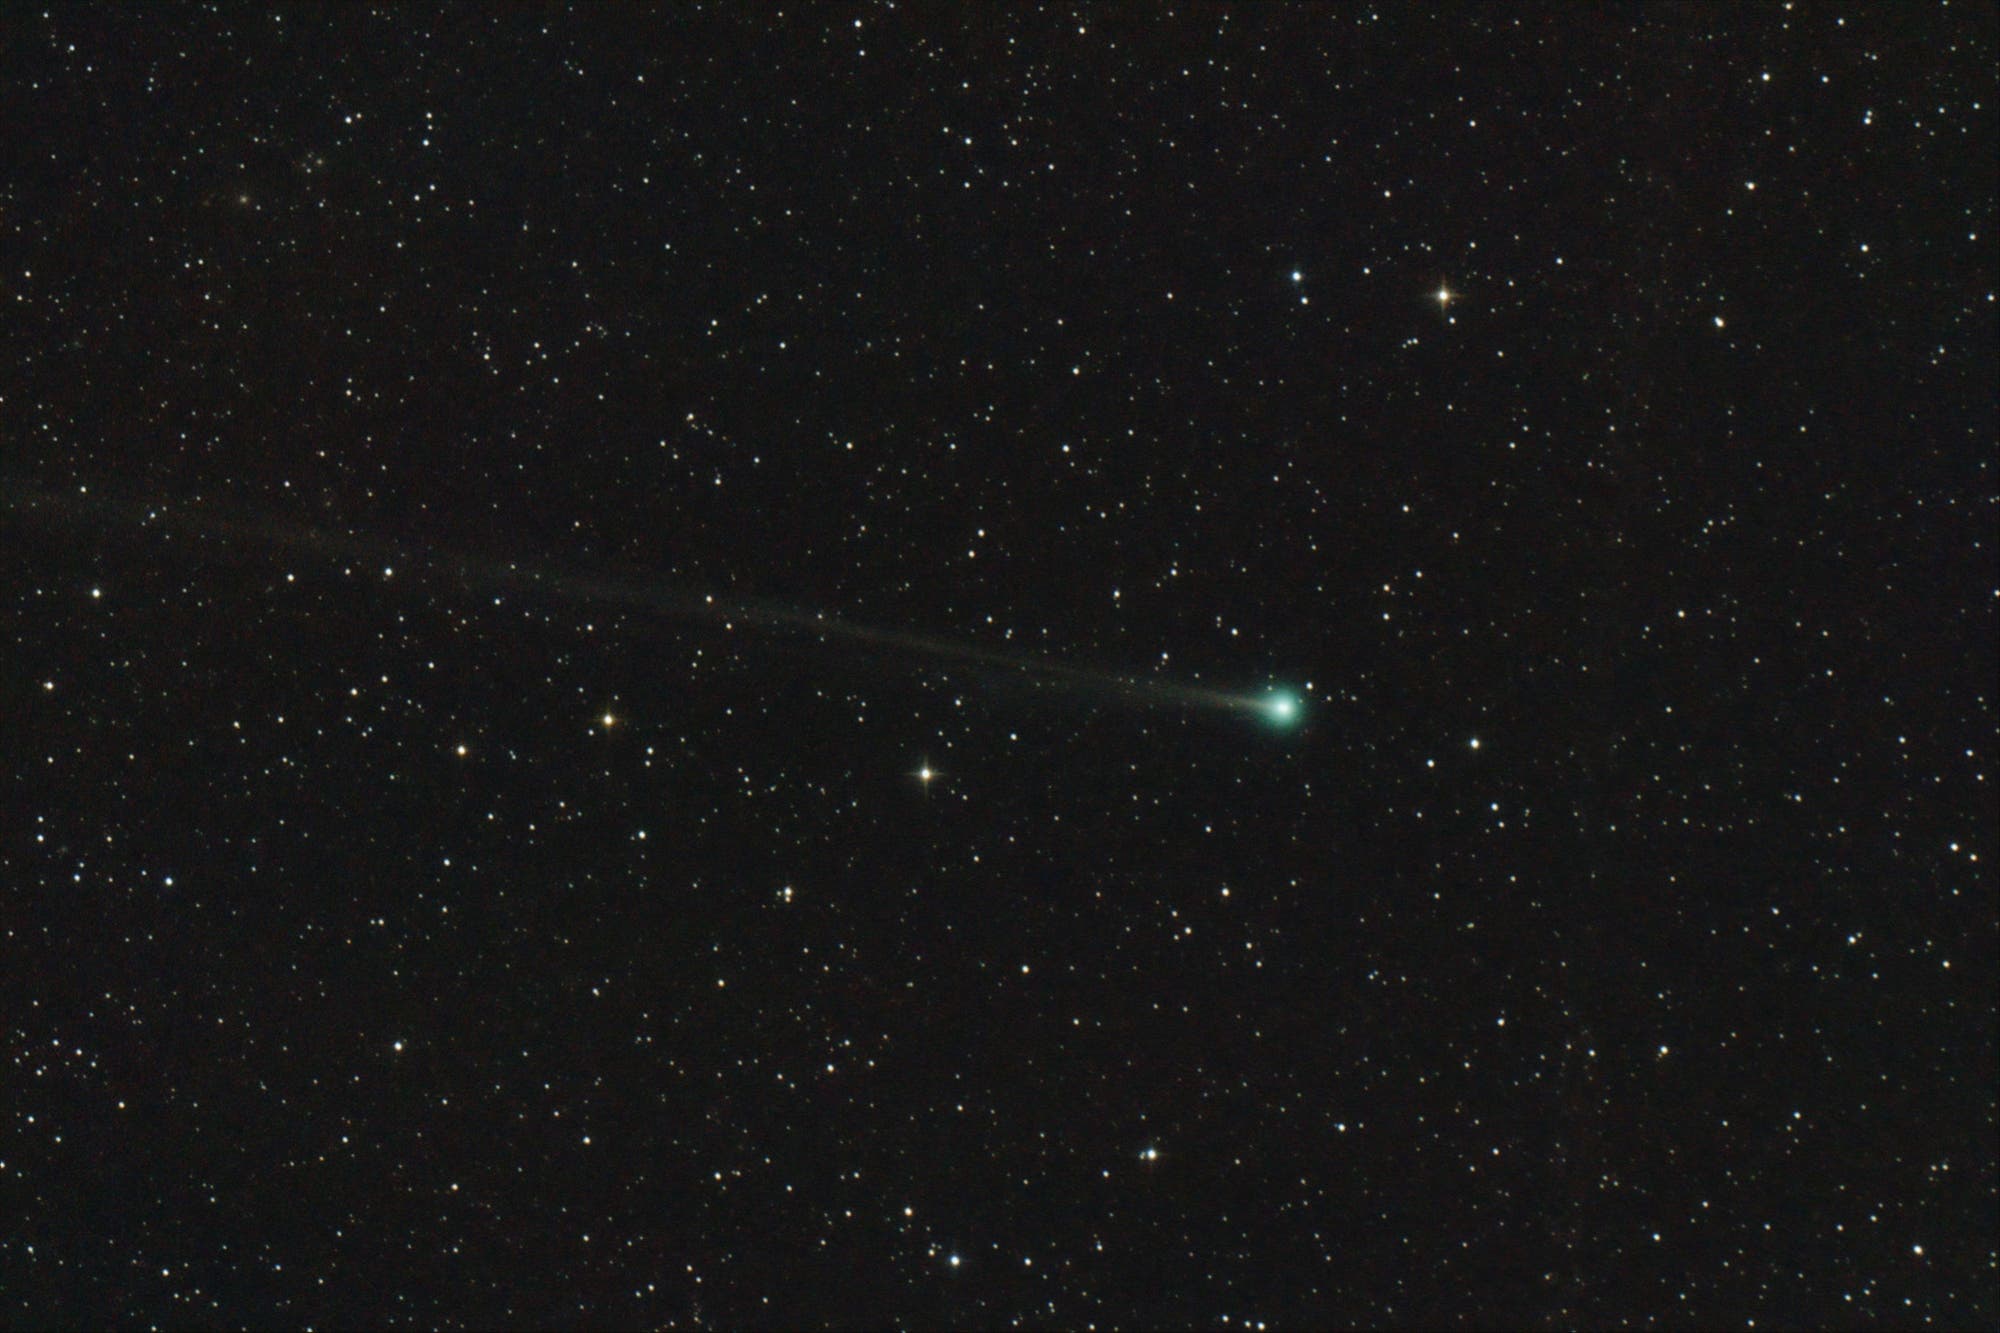 Komet 45P/Honda-Mrkos-Pajduåáková (Übersichtsbild)